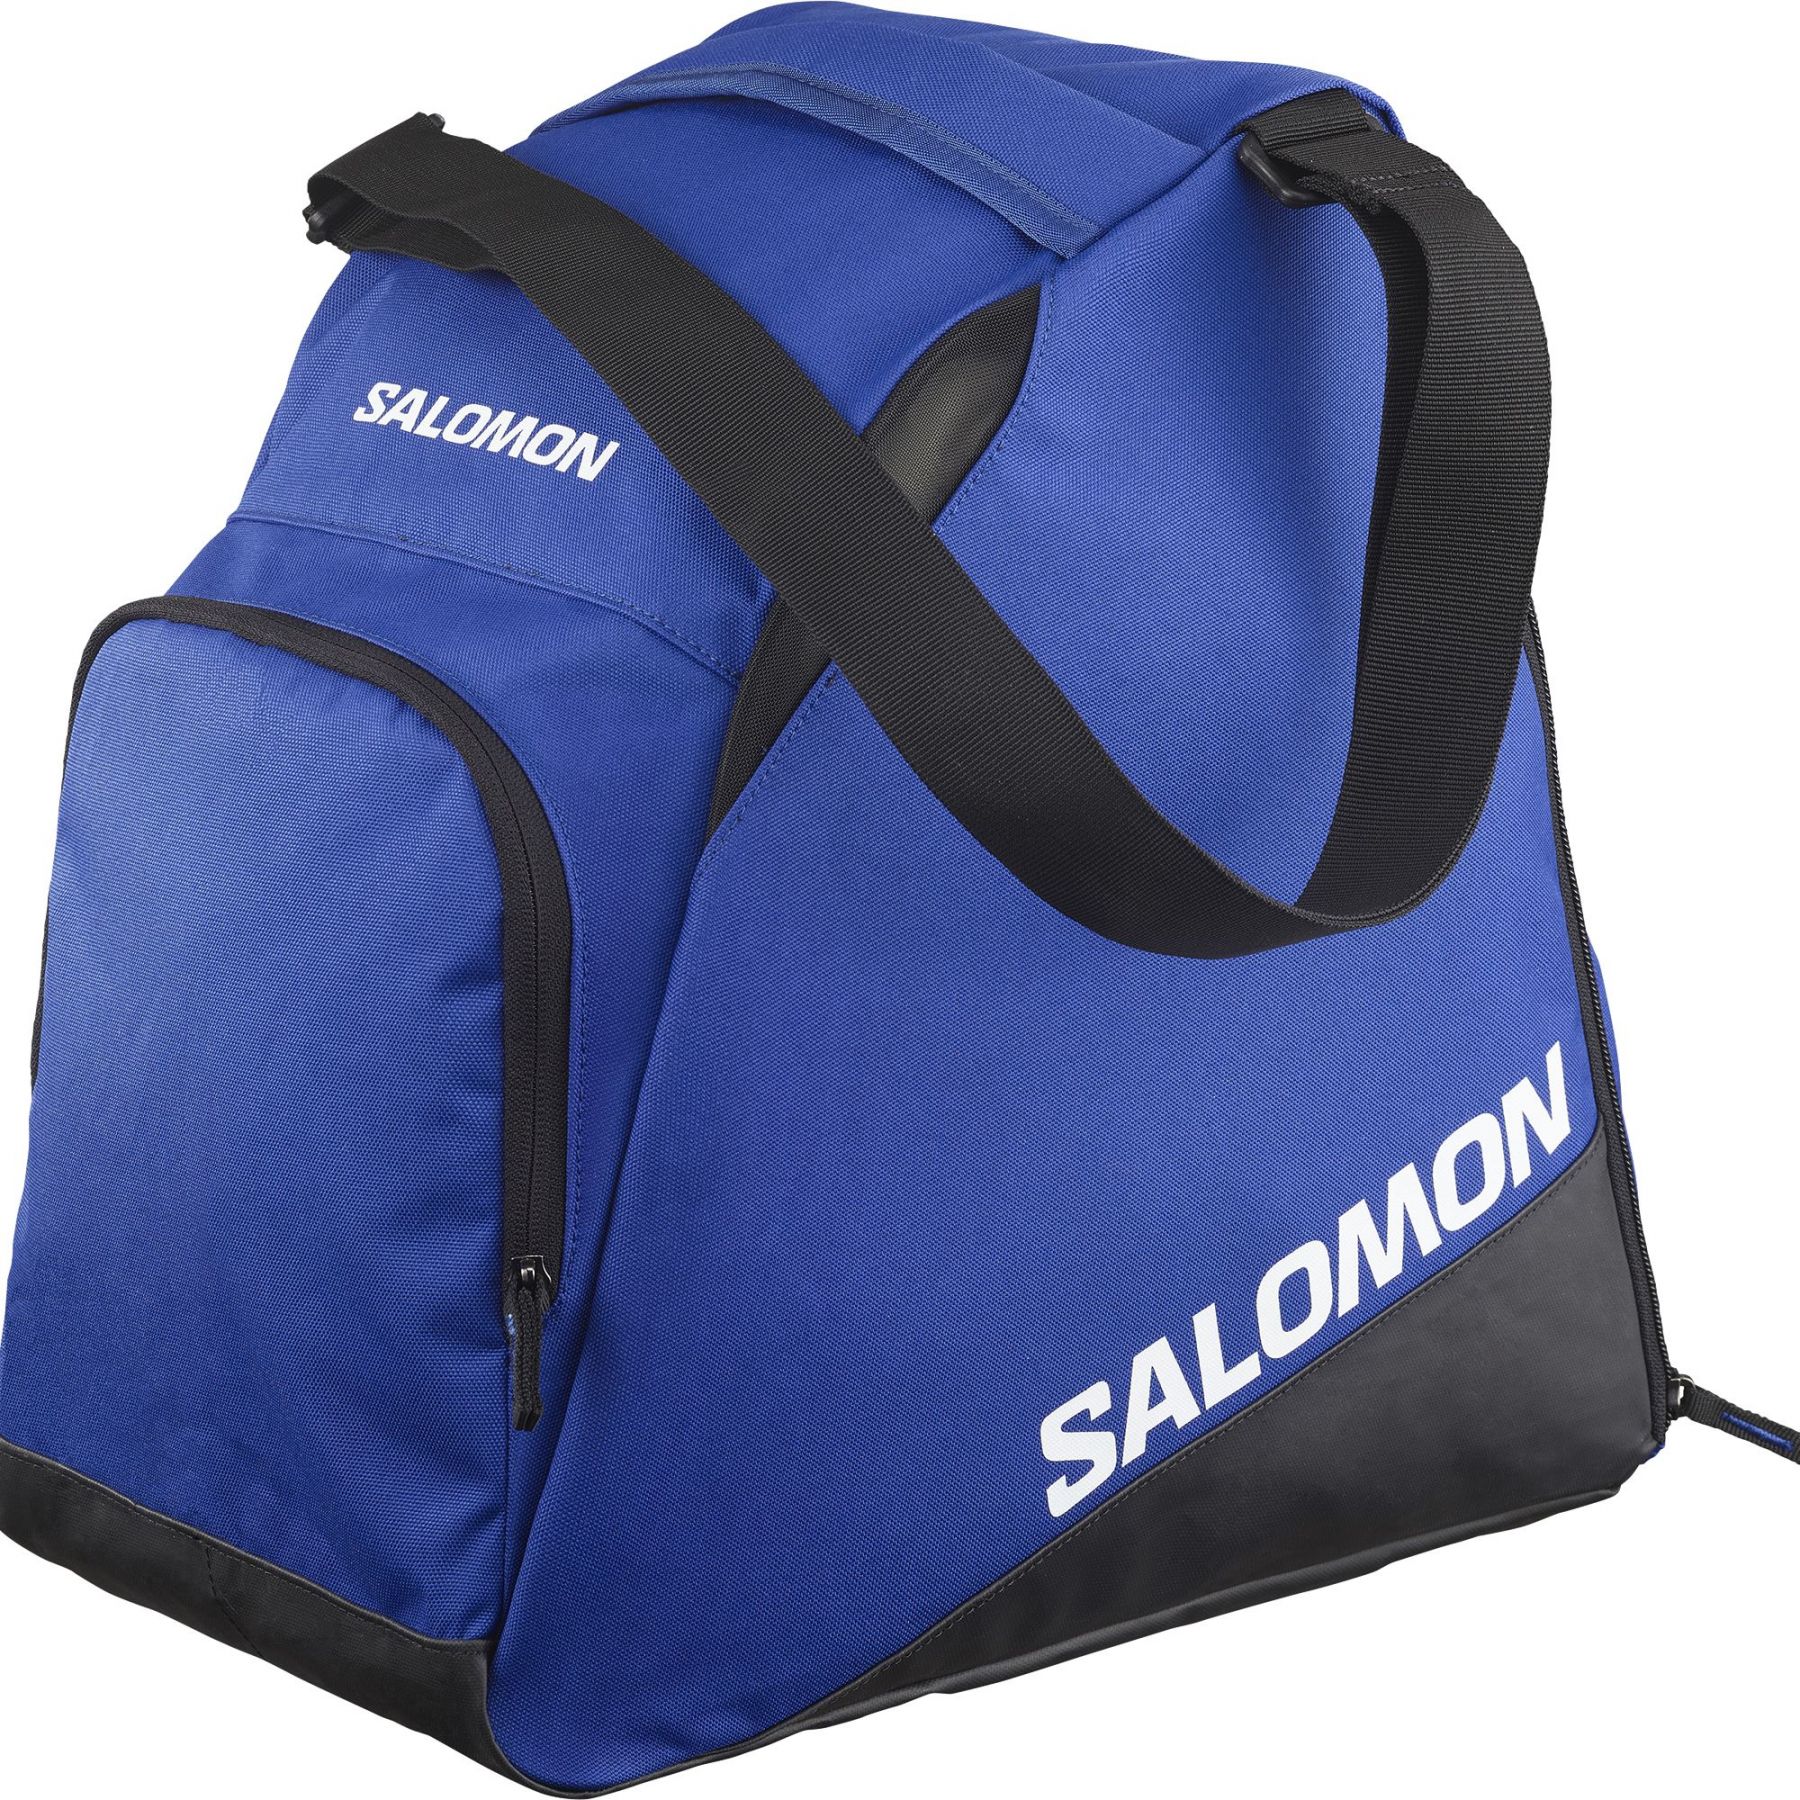 Salomon Original Gearbag, støvletaske, blå